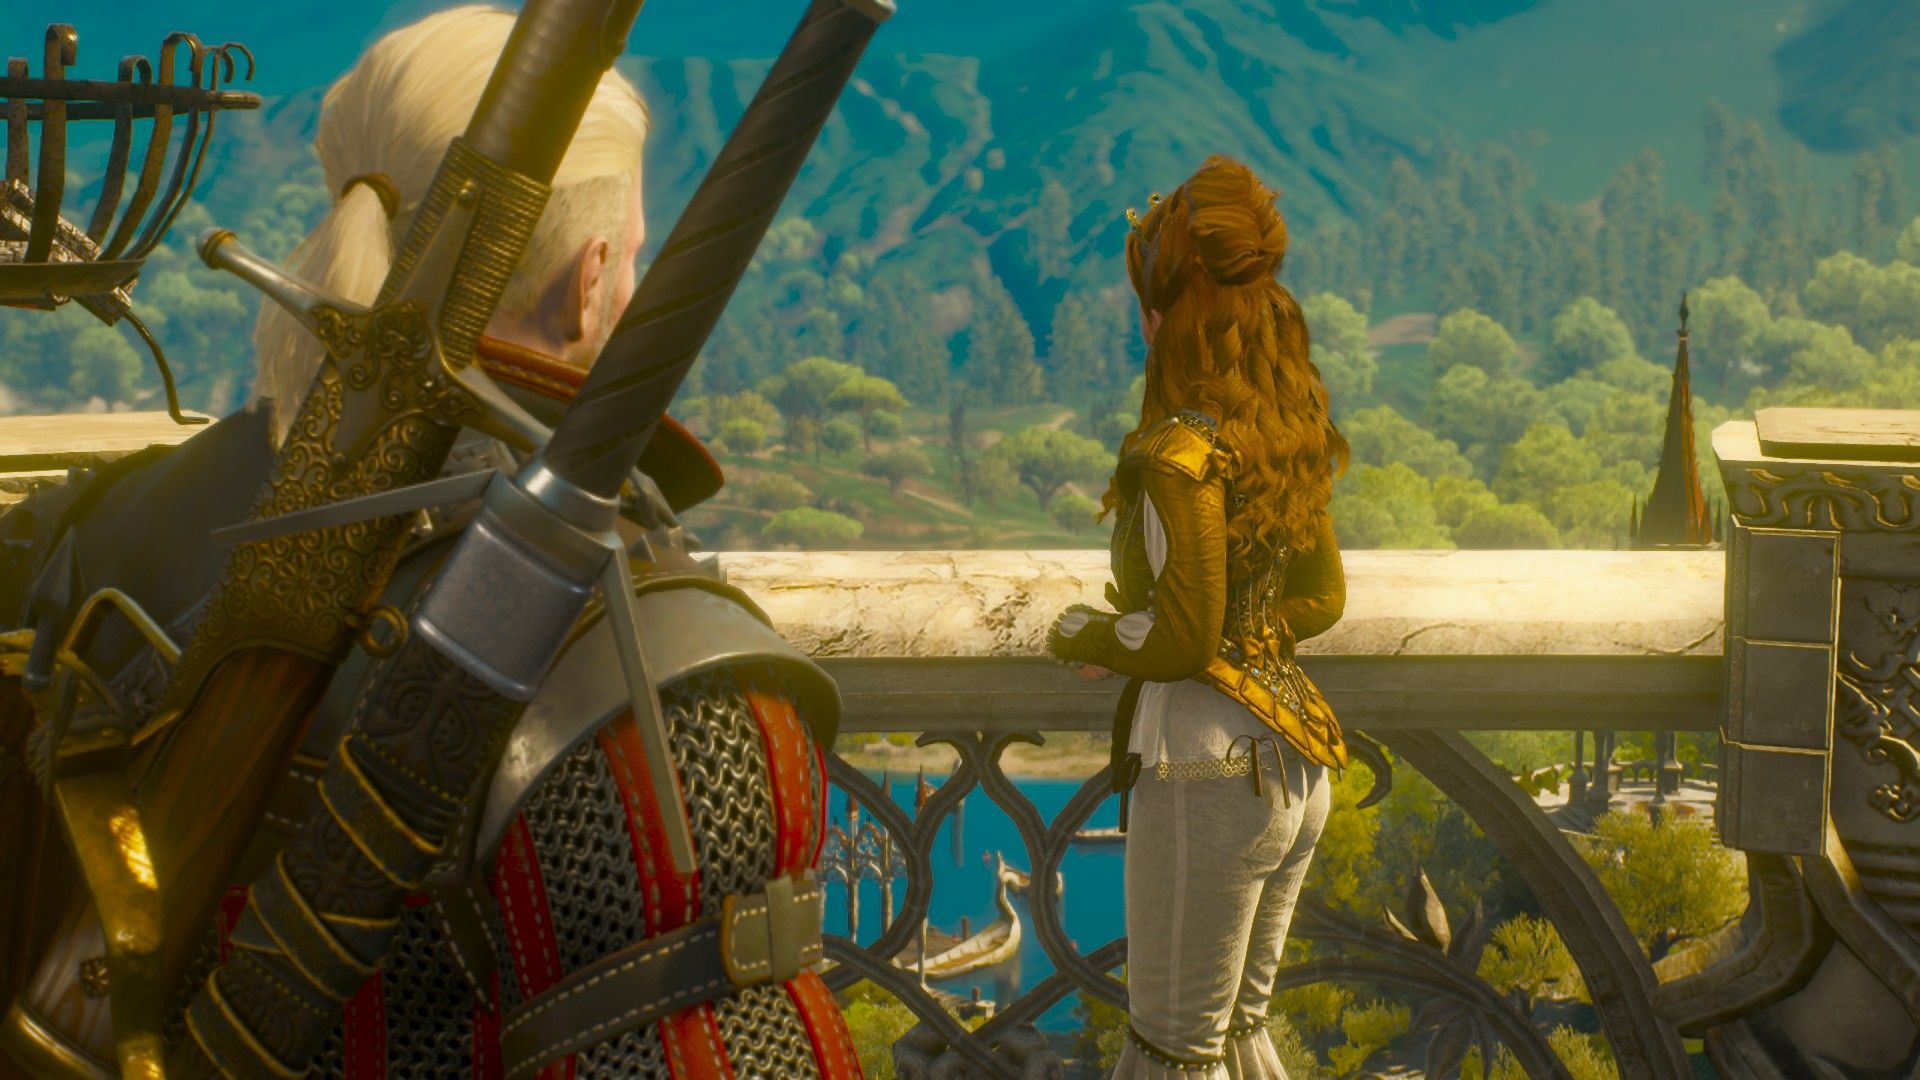 Geralt follows the Duchess to the balcony as she explains the treasure hunt.